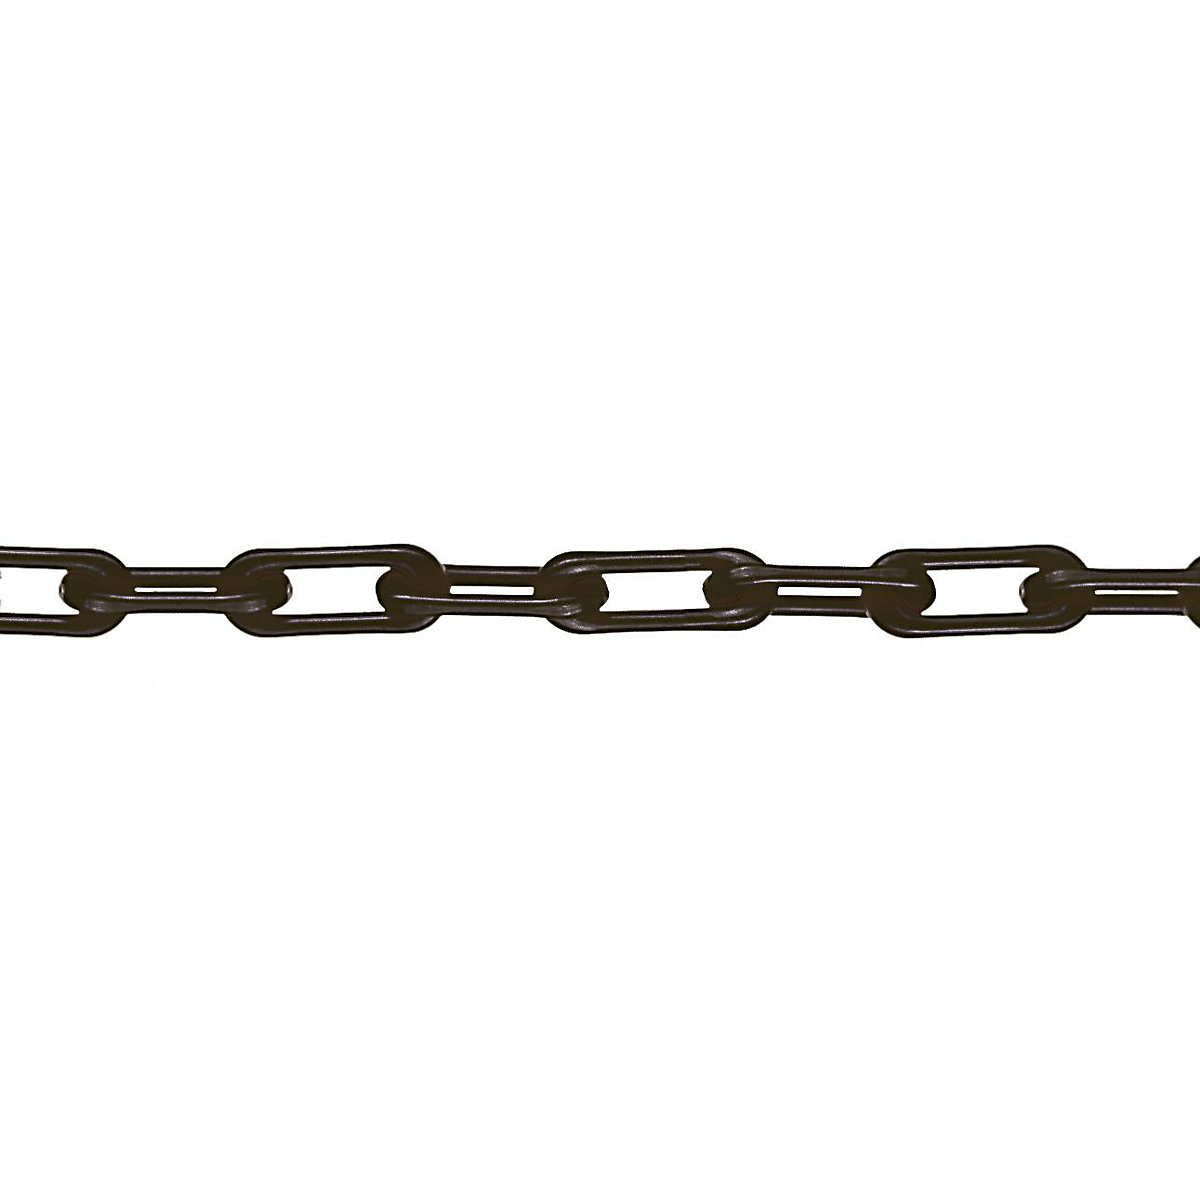 Nylon chain, MNK quality standard 6, band length 50 m, black, 4+ items-6